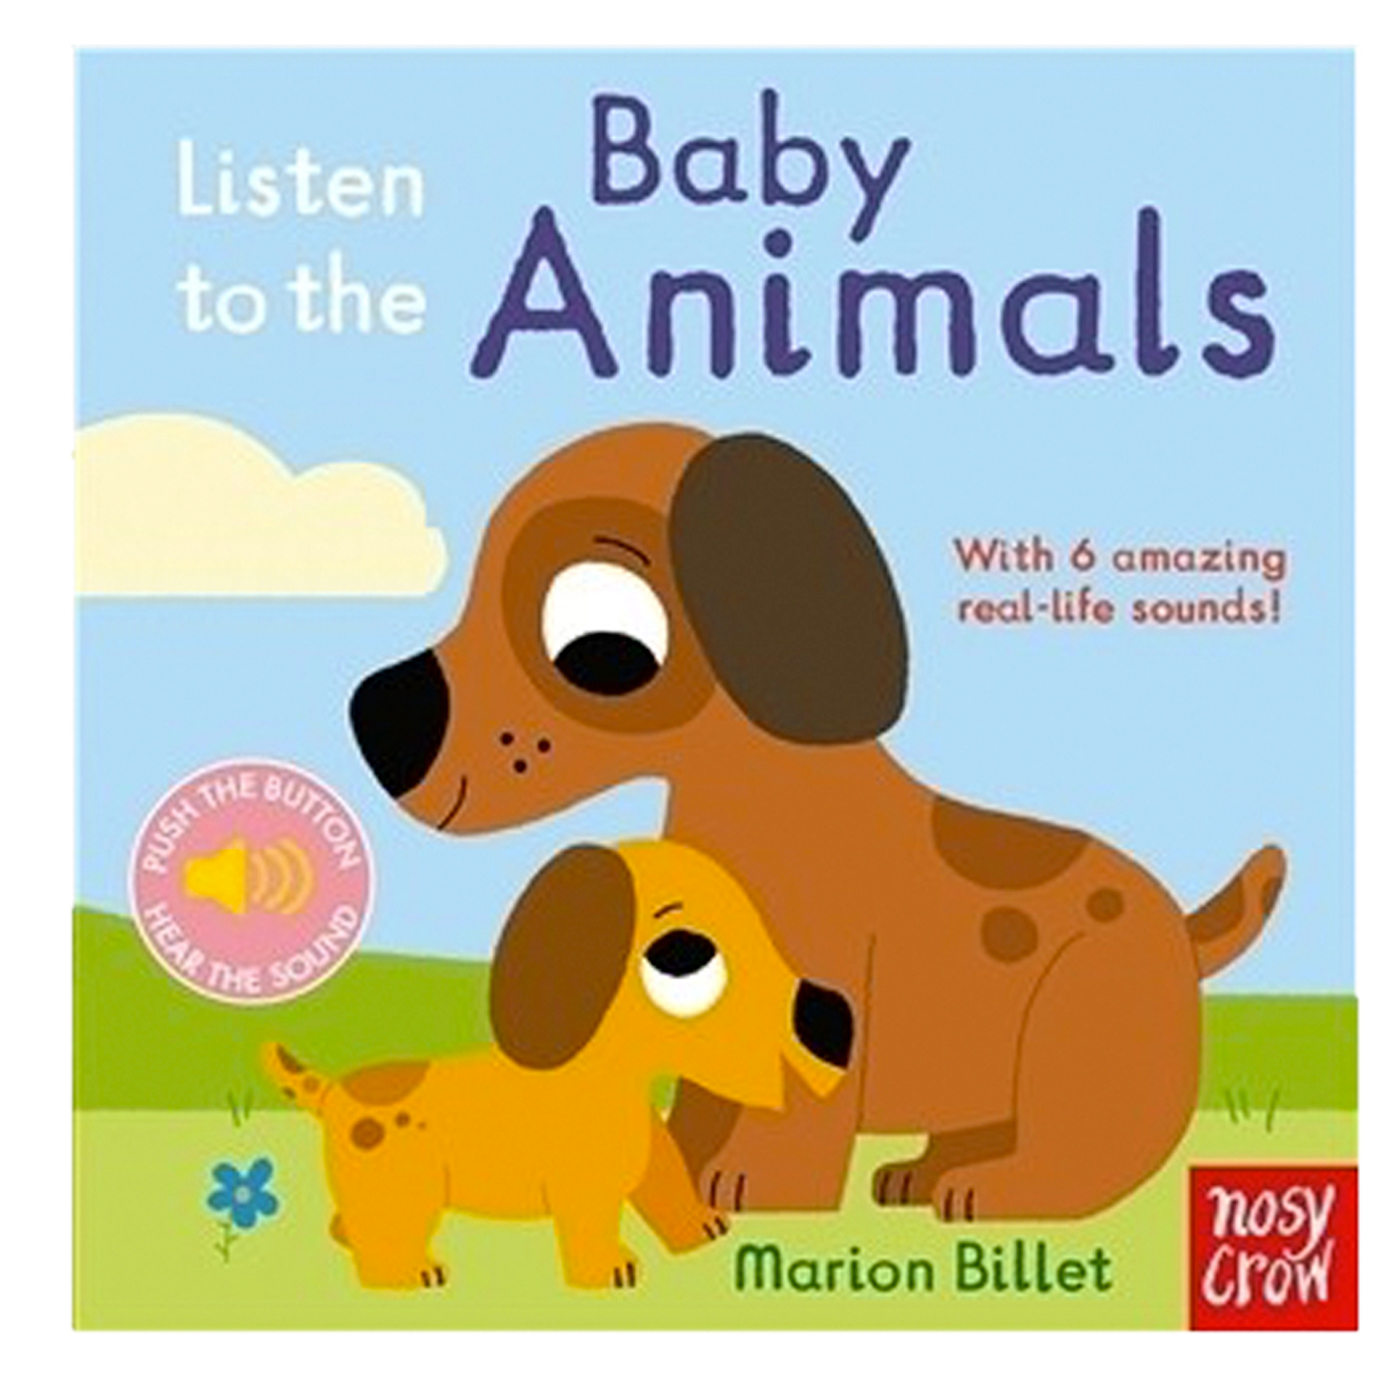  Listen to the: Baby Animals